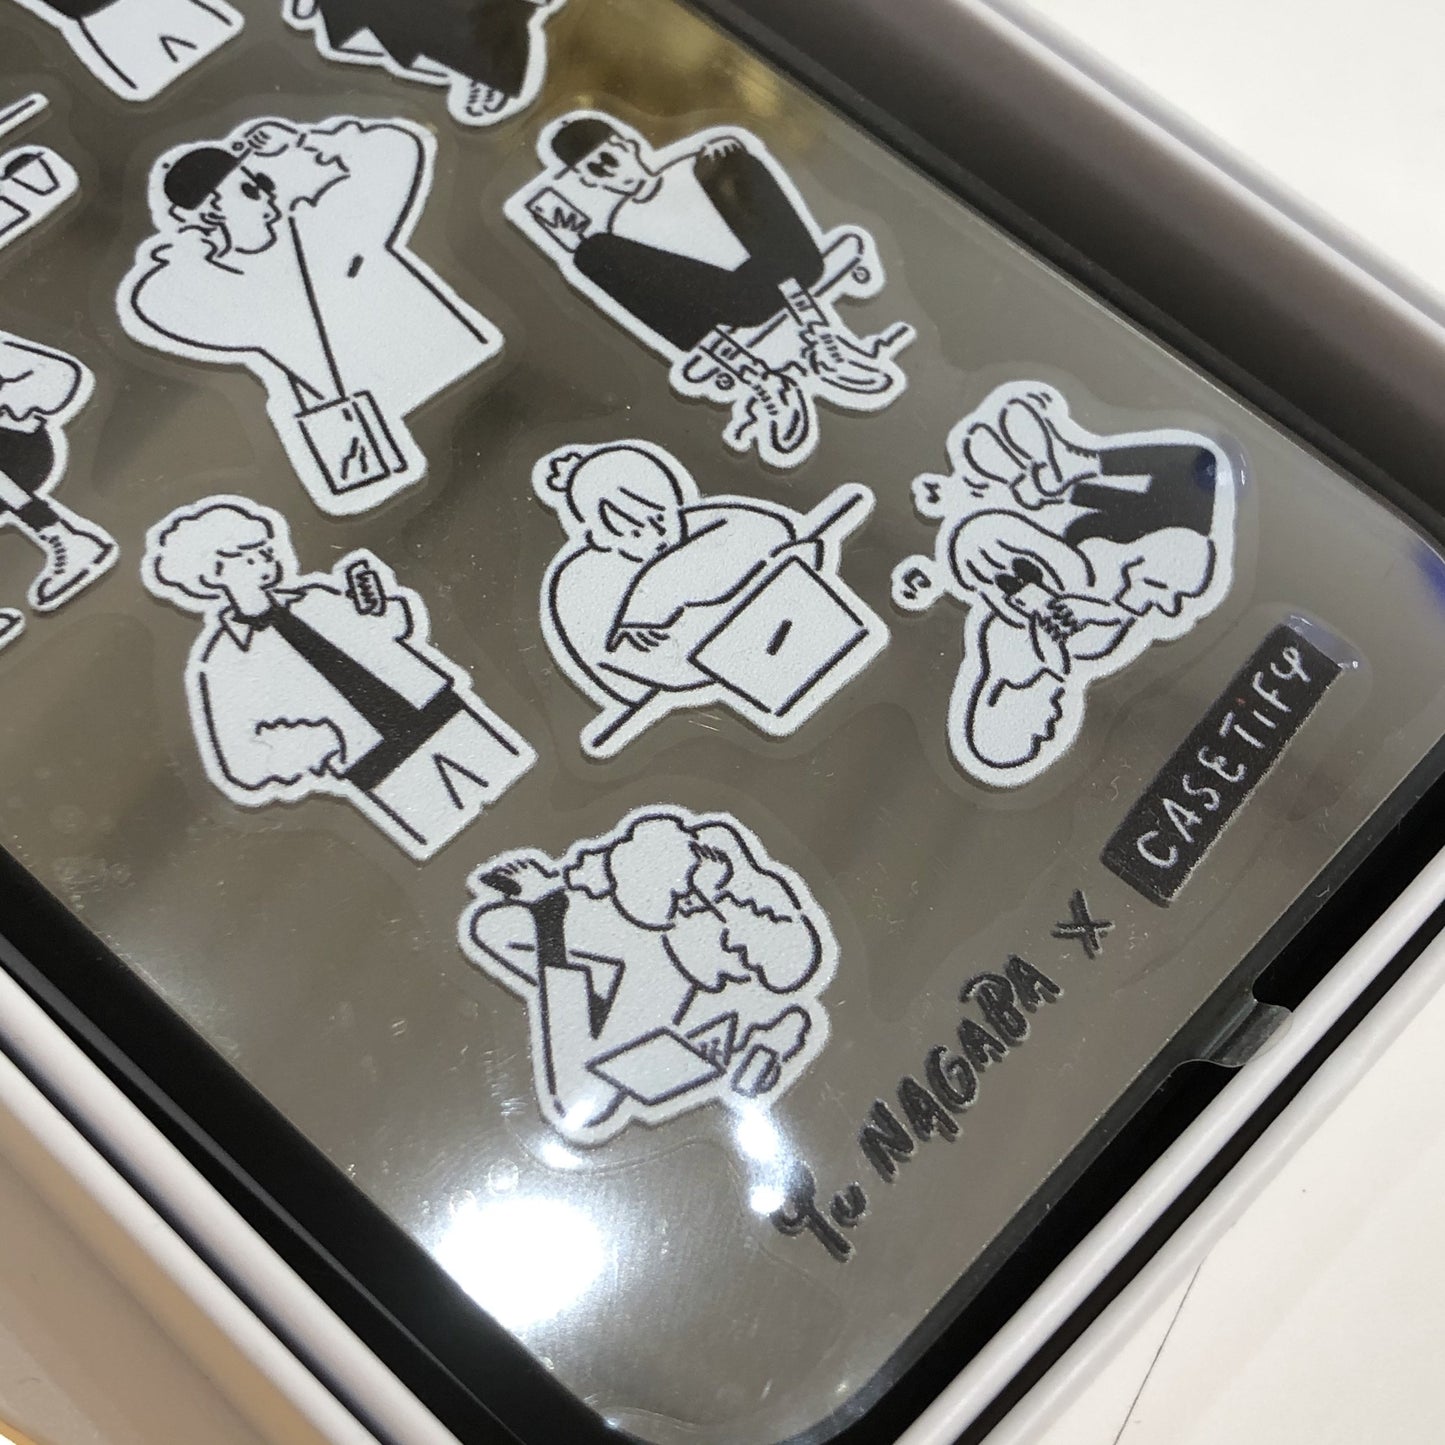 Yu Nagaba x Casetify 2020 iPhone 11 Max case